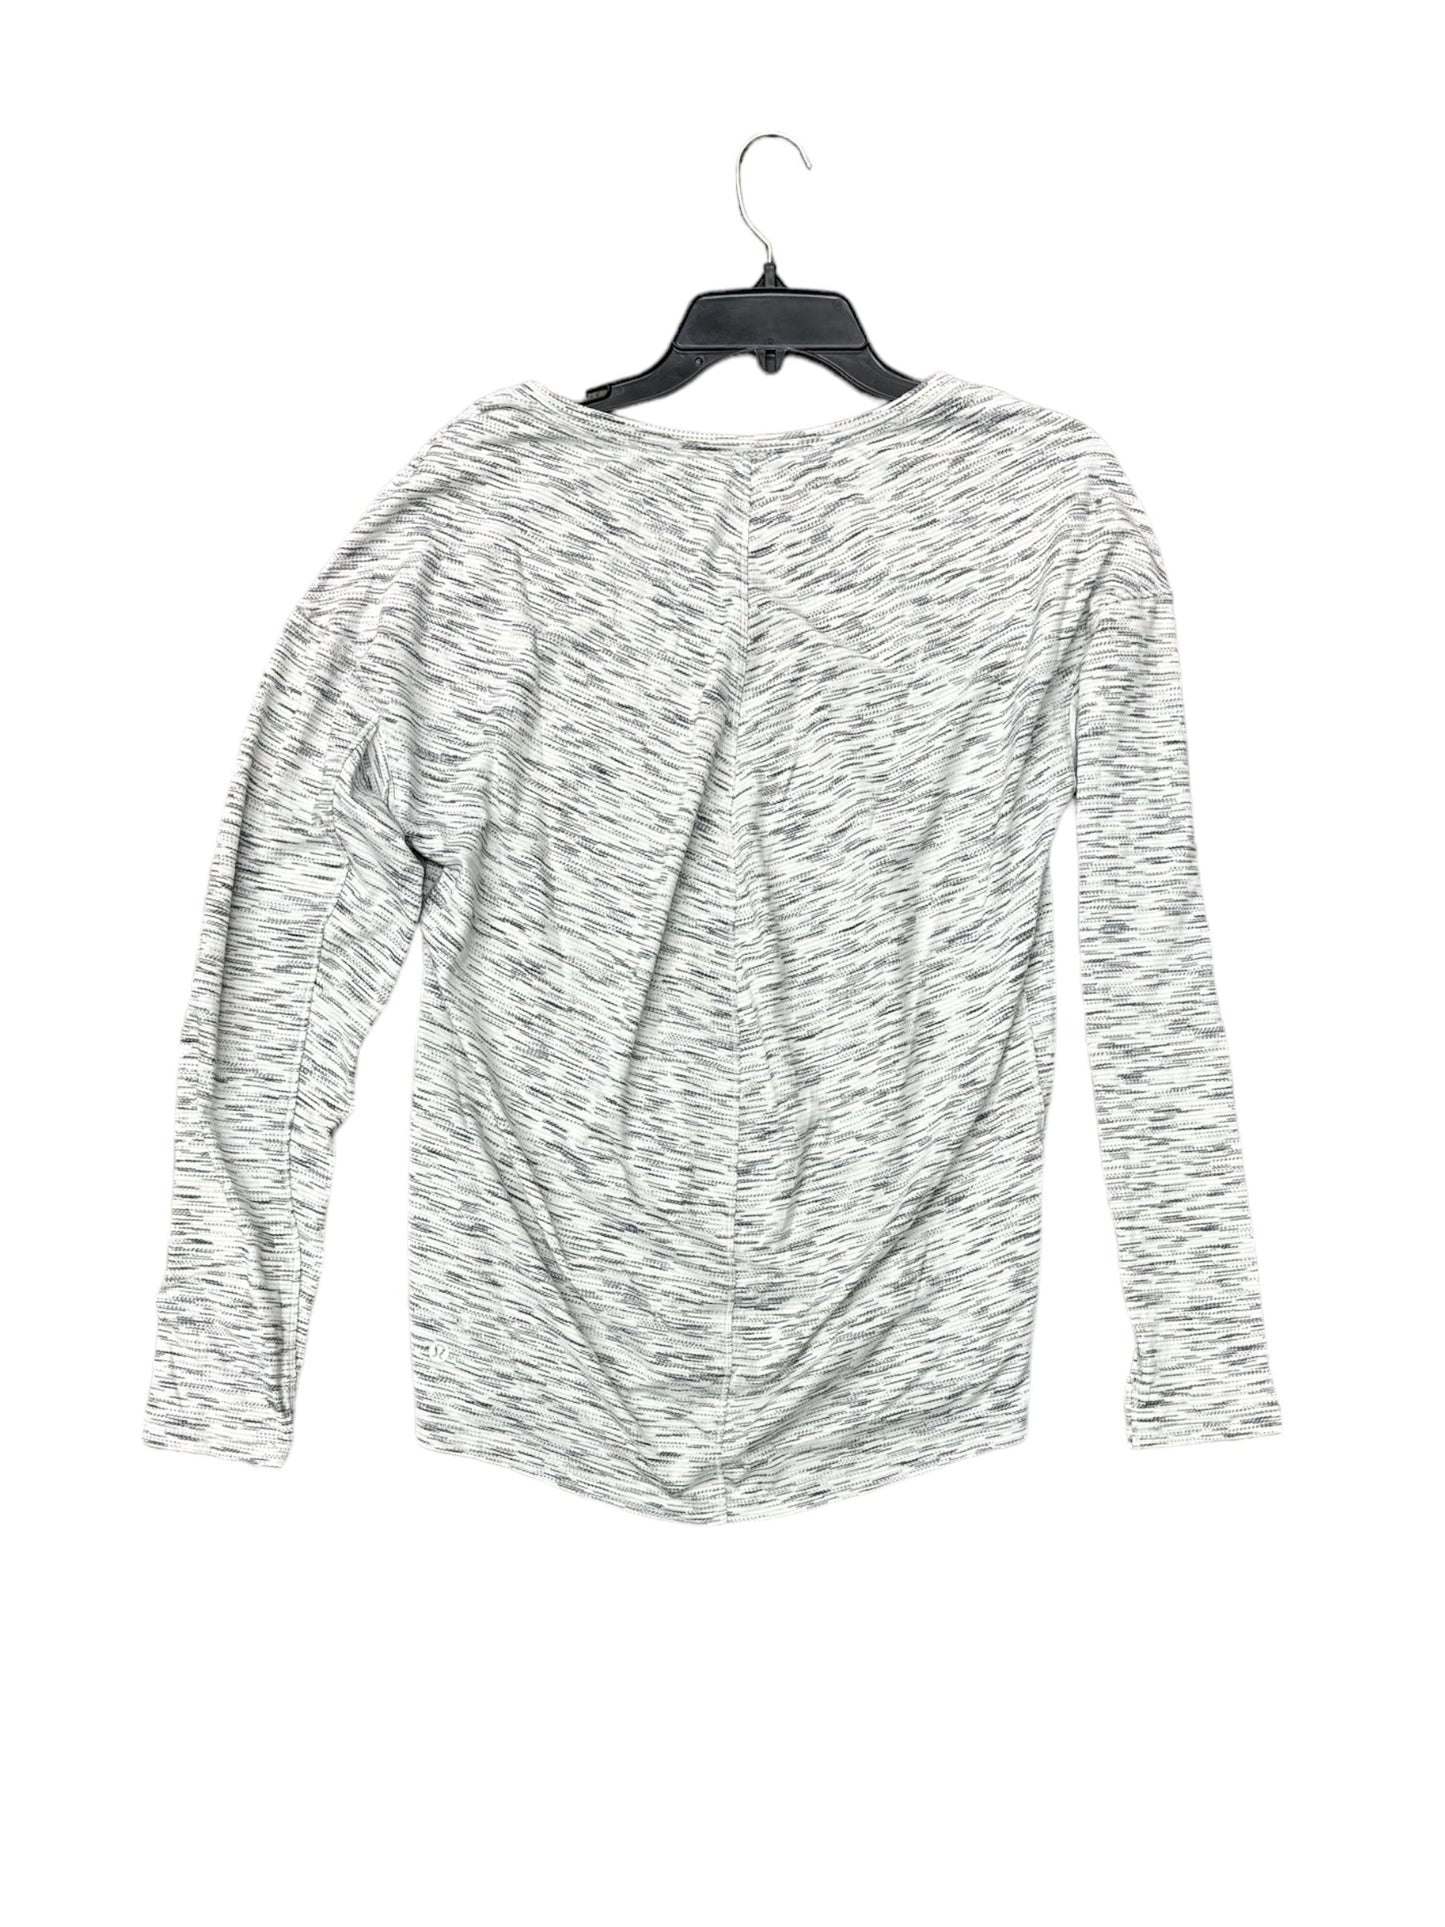 Grey Athletic Top Long Sleeve Collar Lululemon, Size L